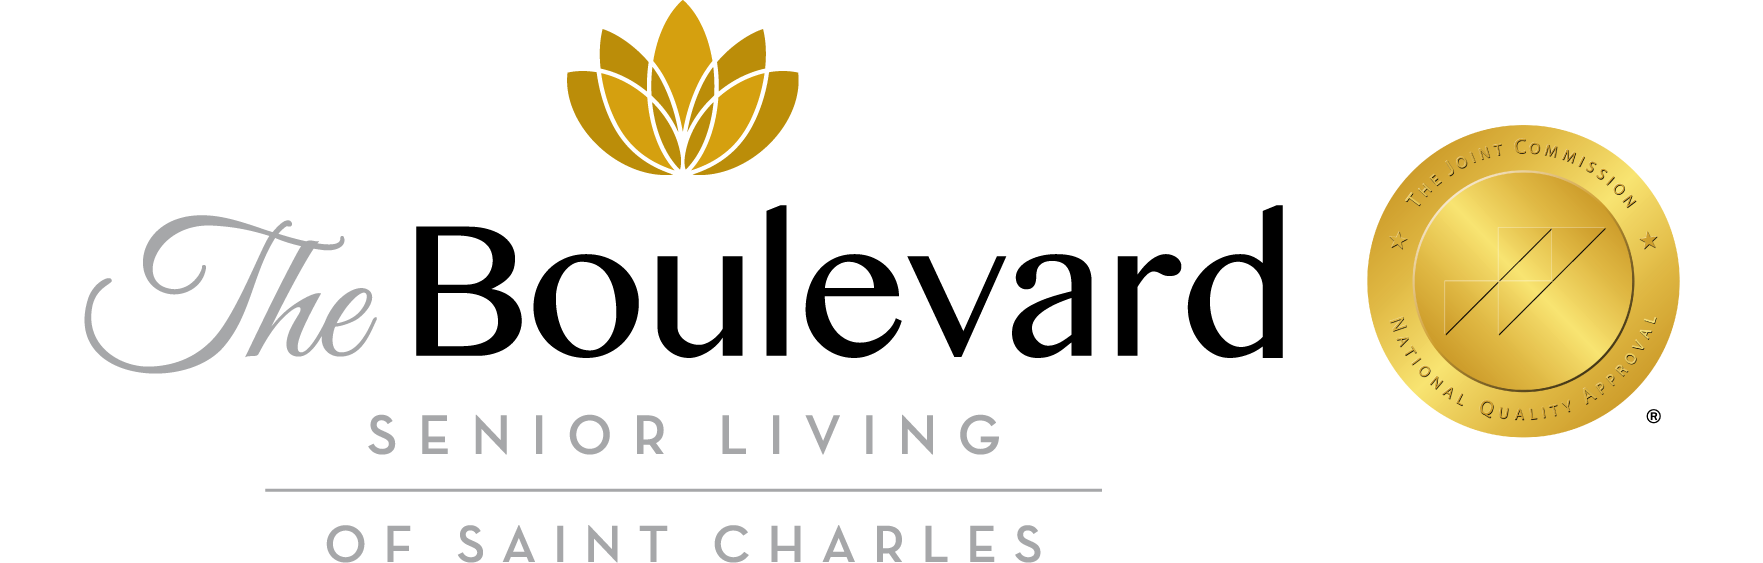 The Boulevard of Saint Charles Senior Living - Joint Commission Award Badge